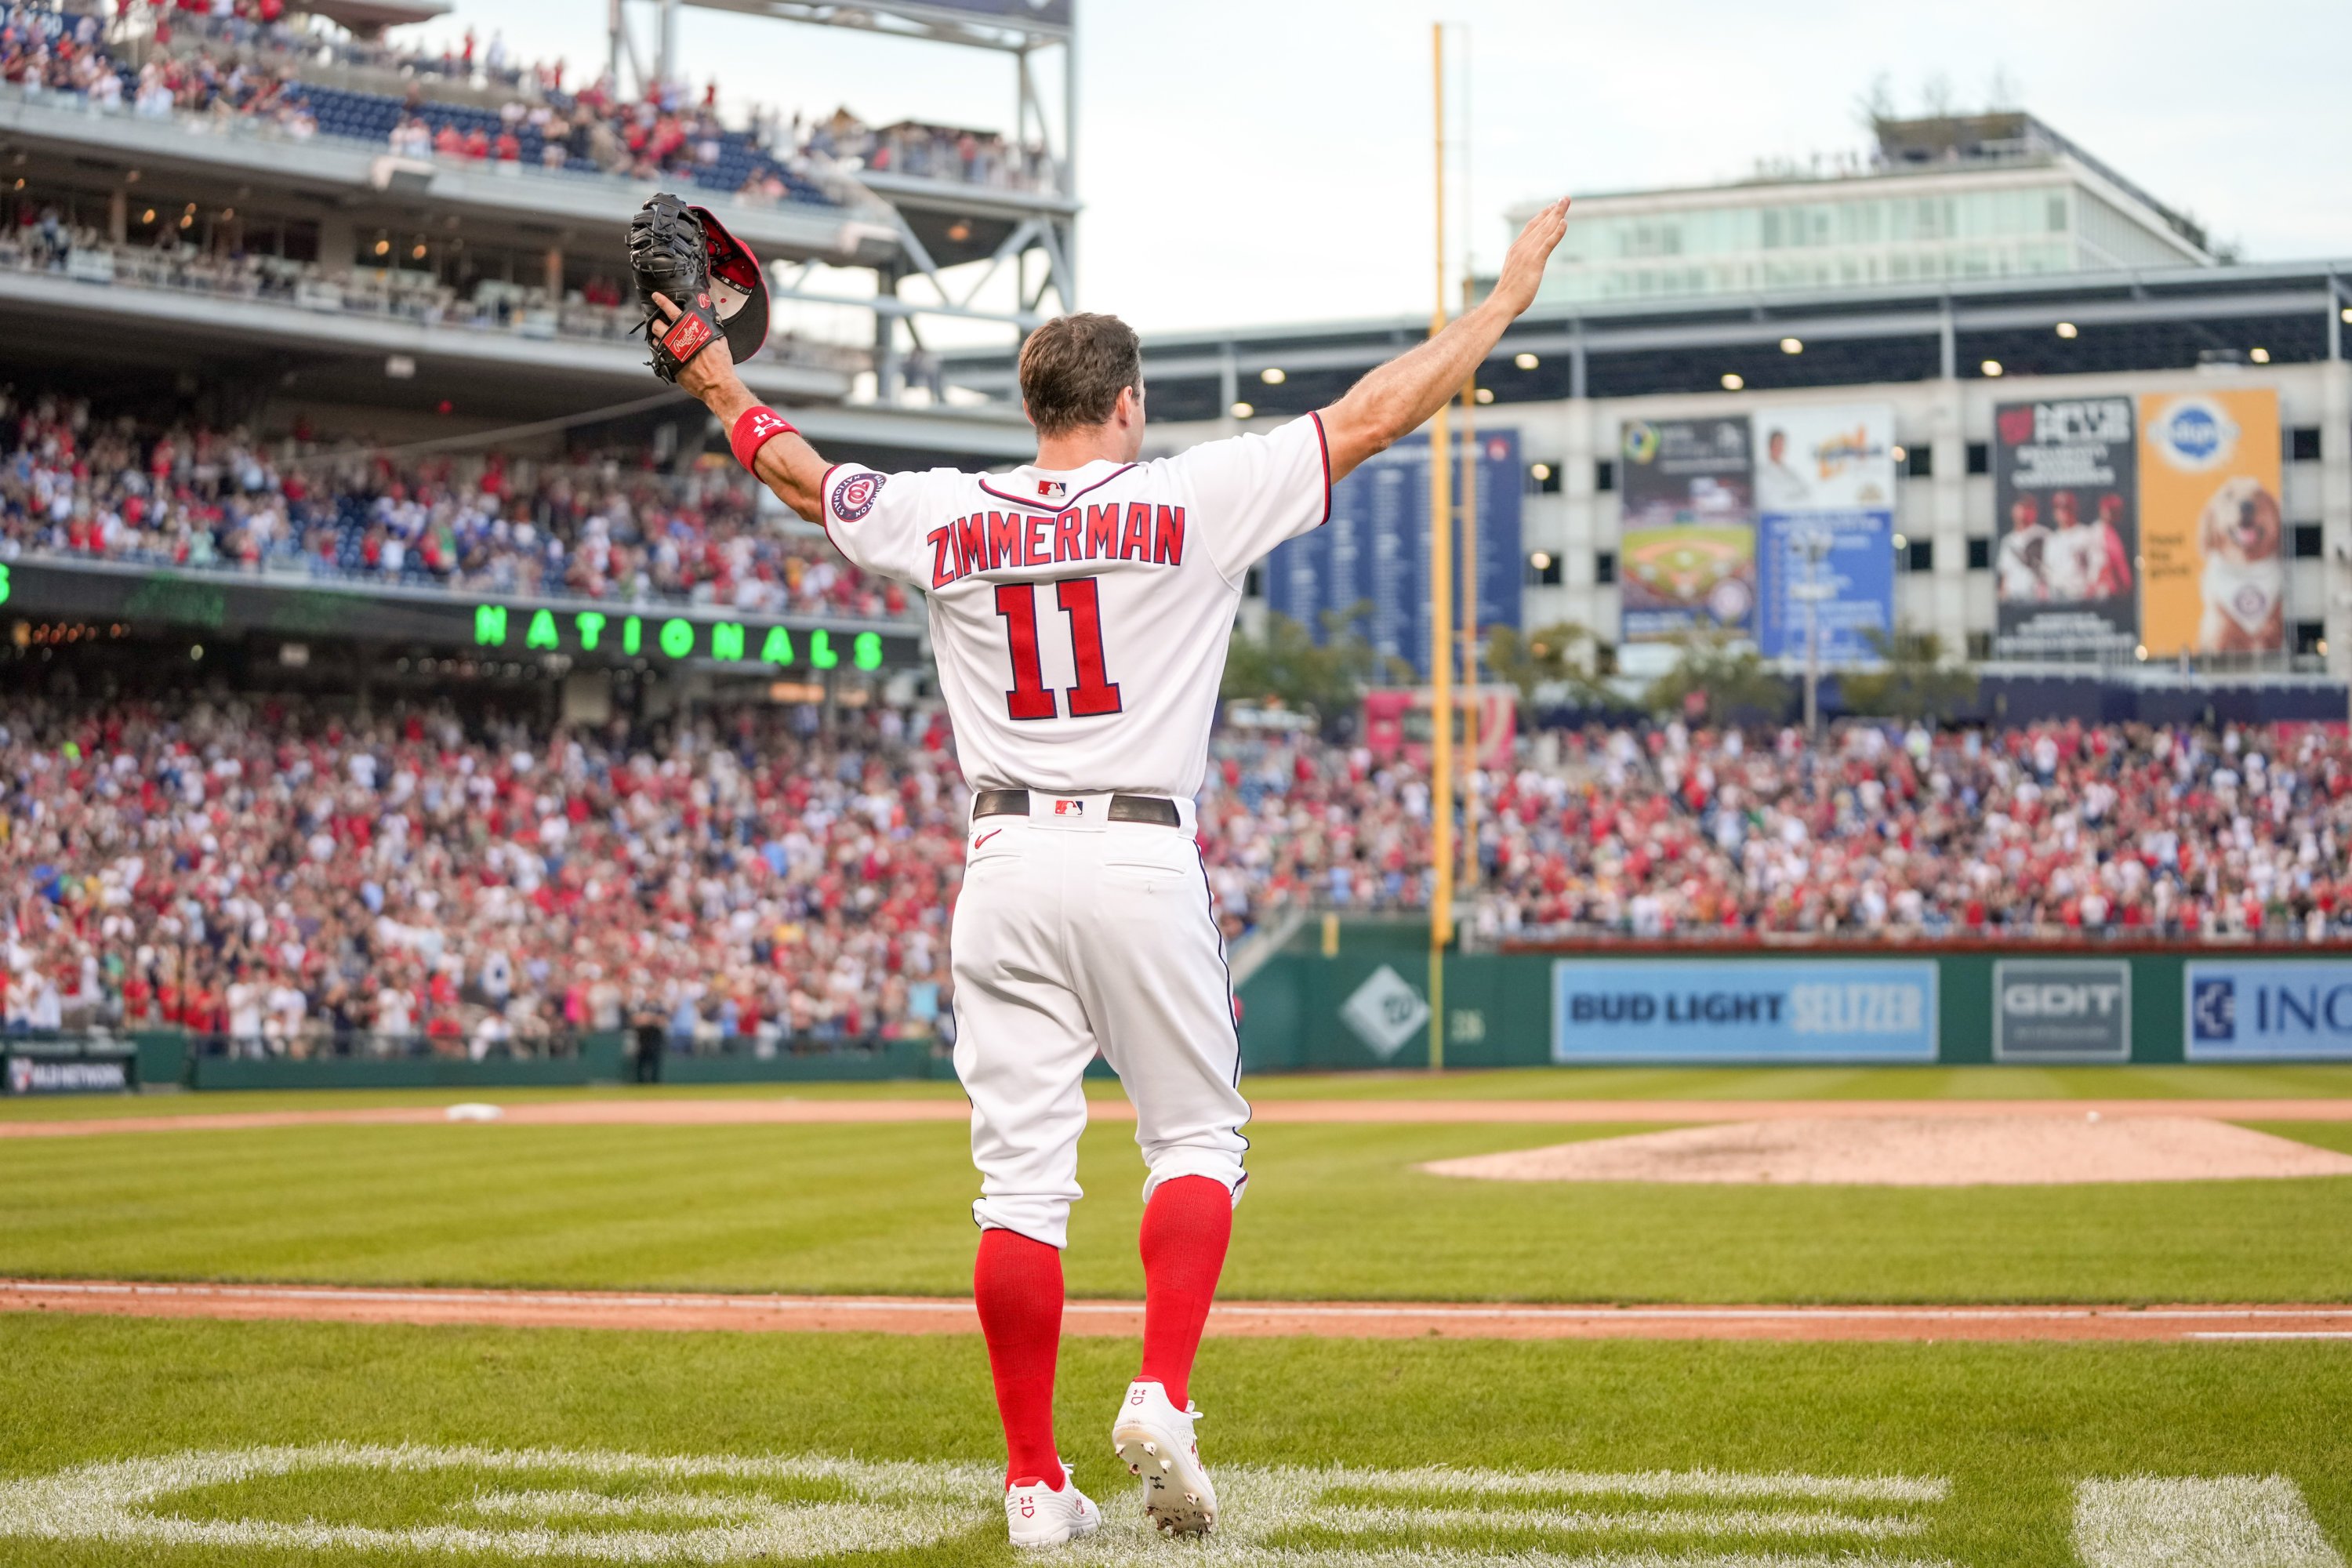 Nationals to Retire Ryan Zimmerman's Number 11 on Saturday - Washingtonian